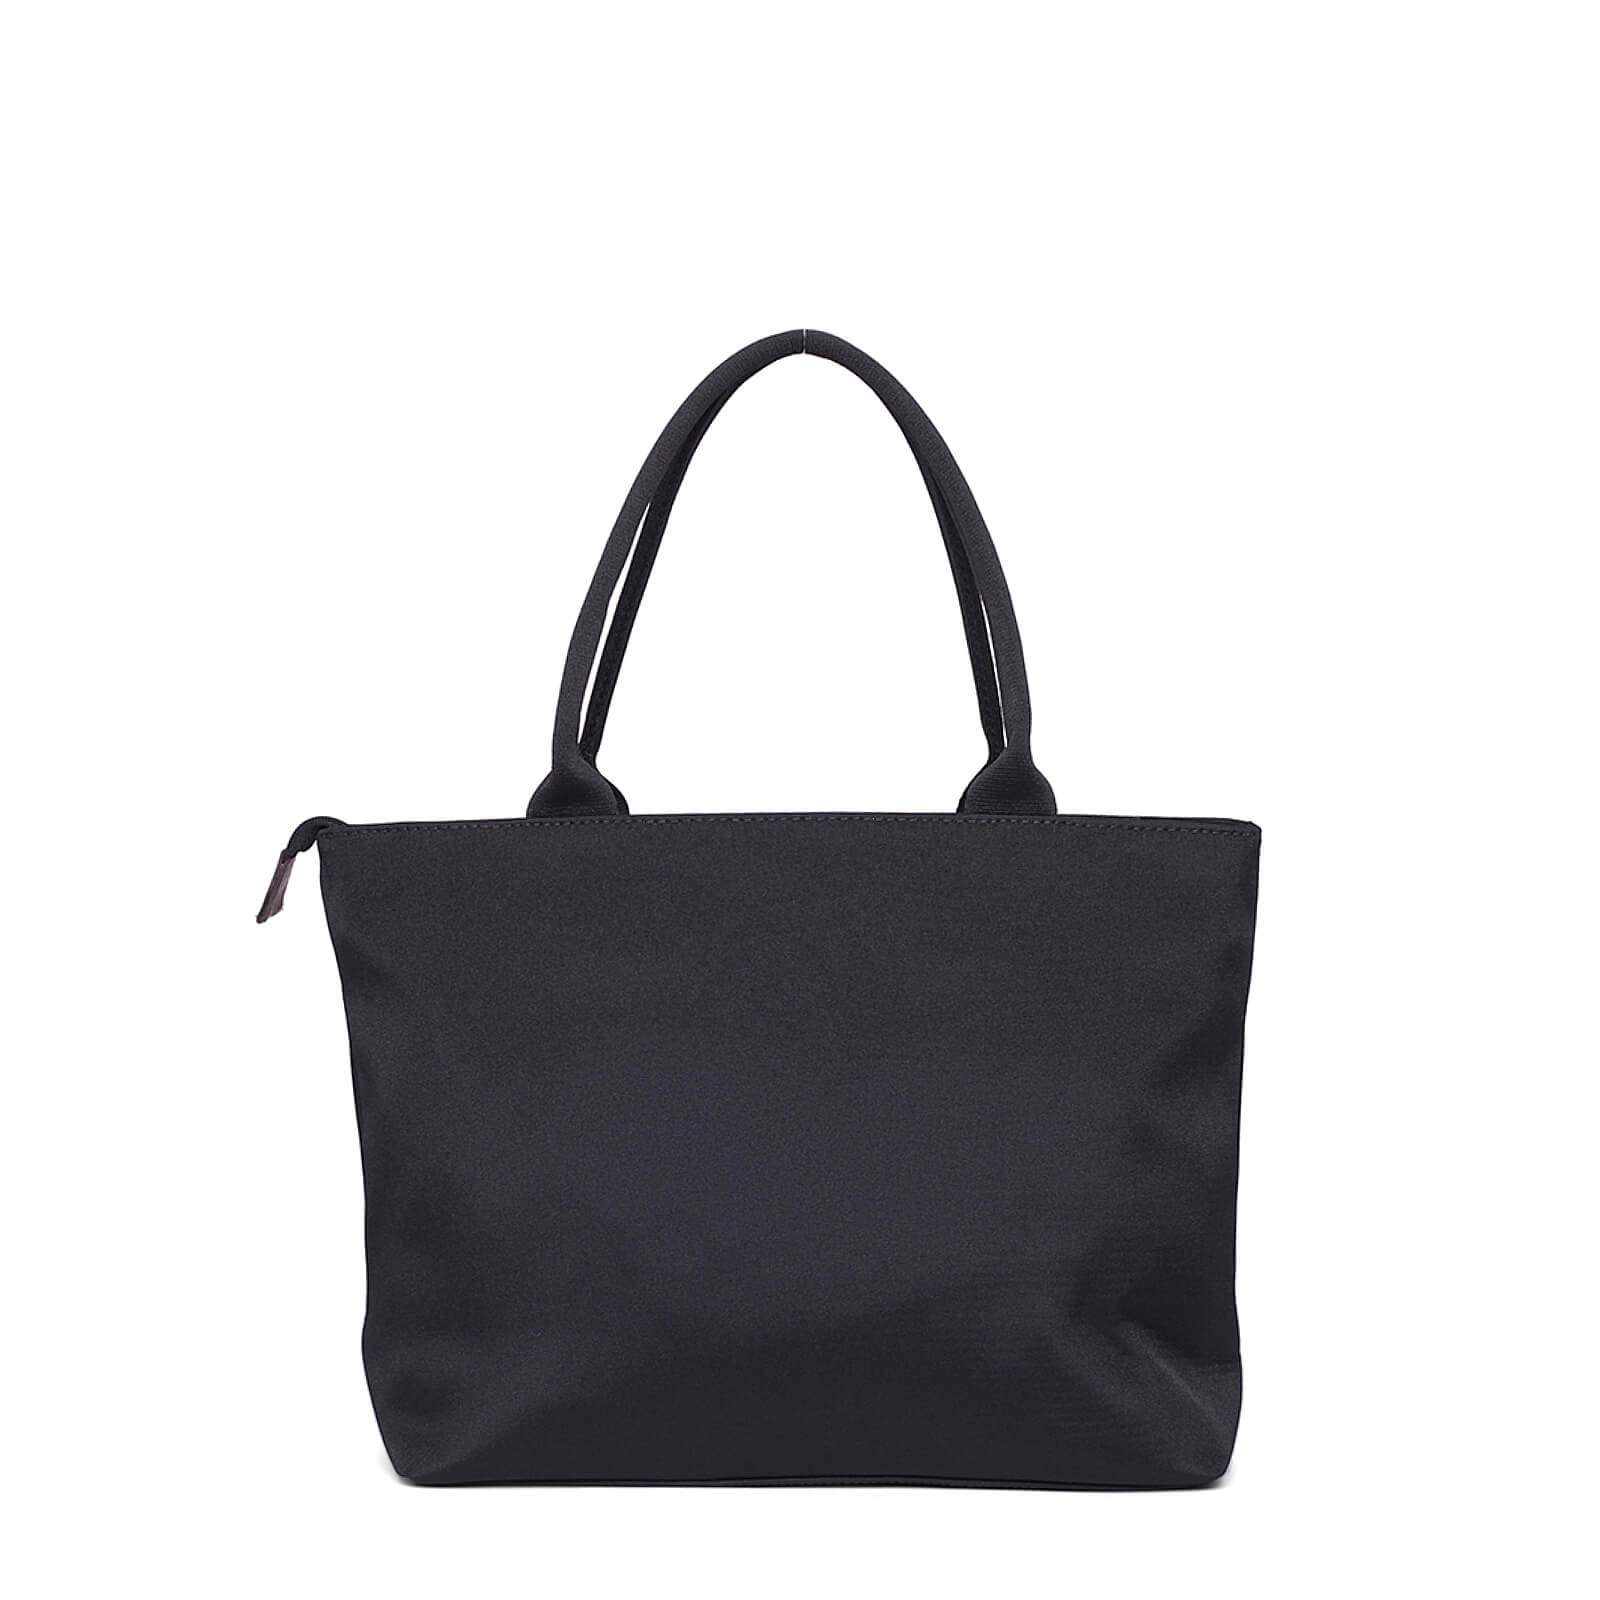 bolsa-shopping-bag-nylon-61092-v24-unclek-preto-5